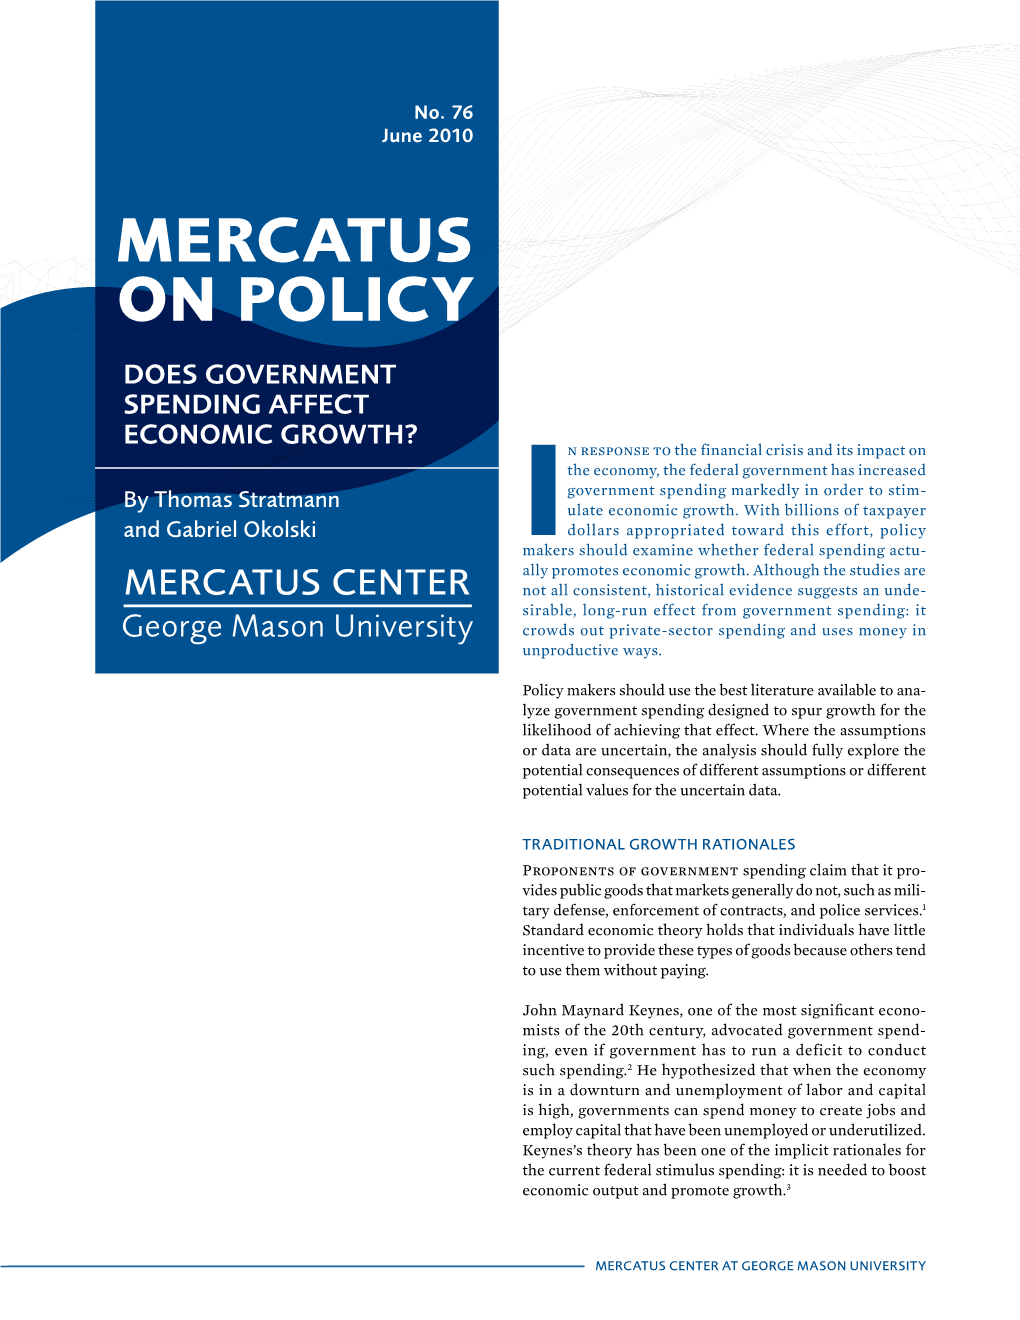 Mercatus on Policy